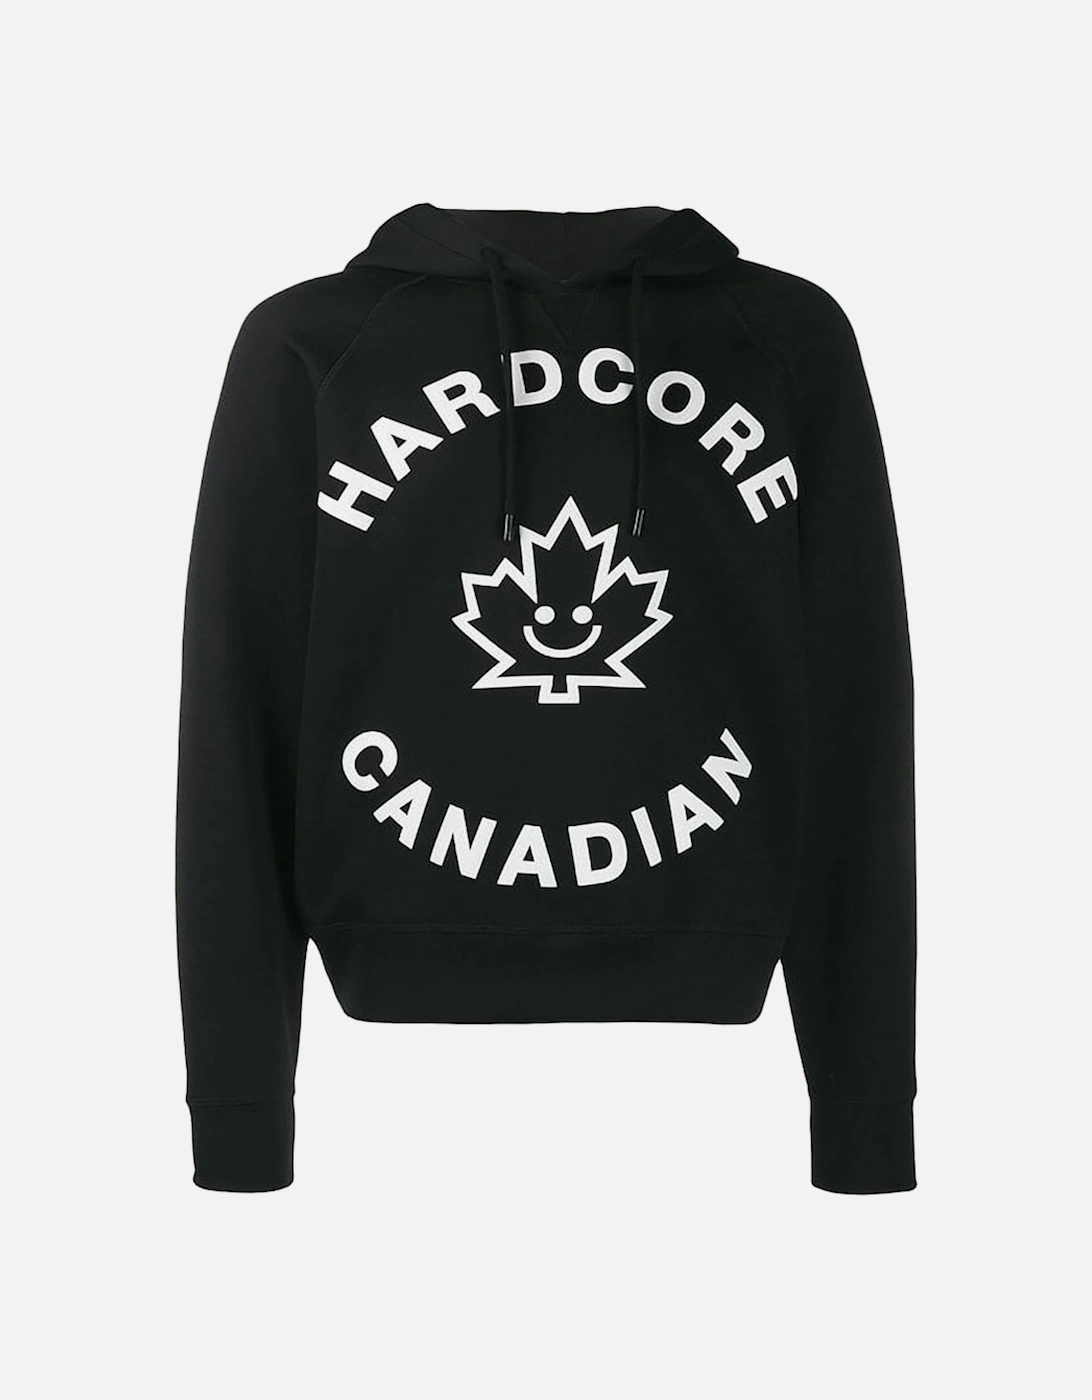 Hardcore Canadian Hood Black, 2 of 1